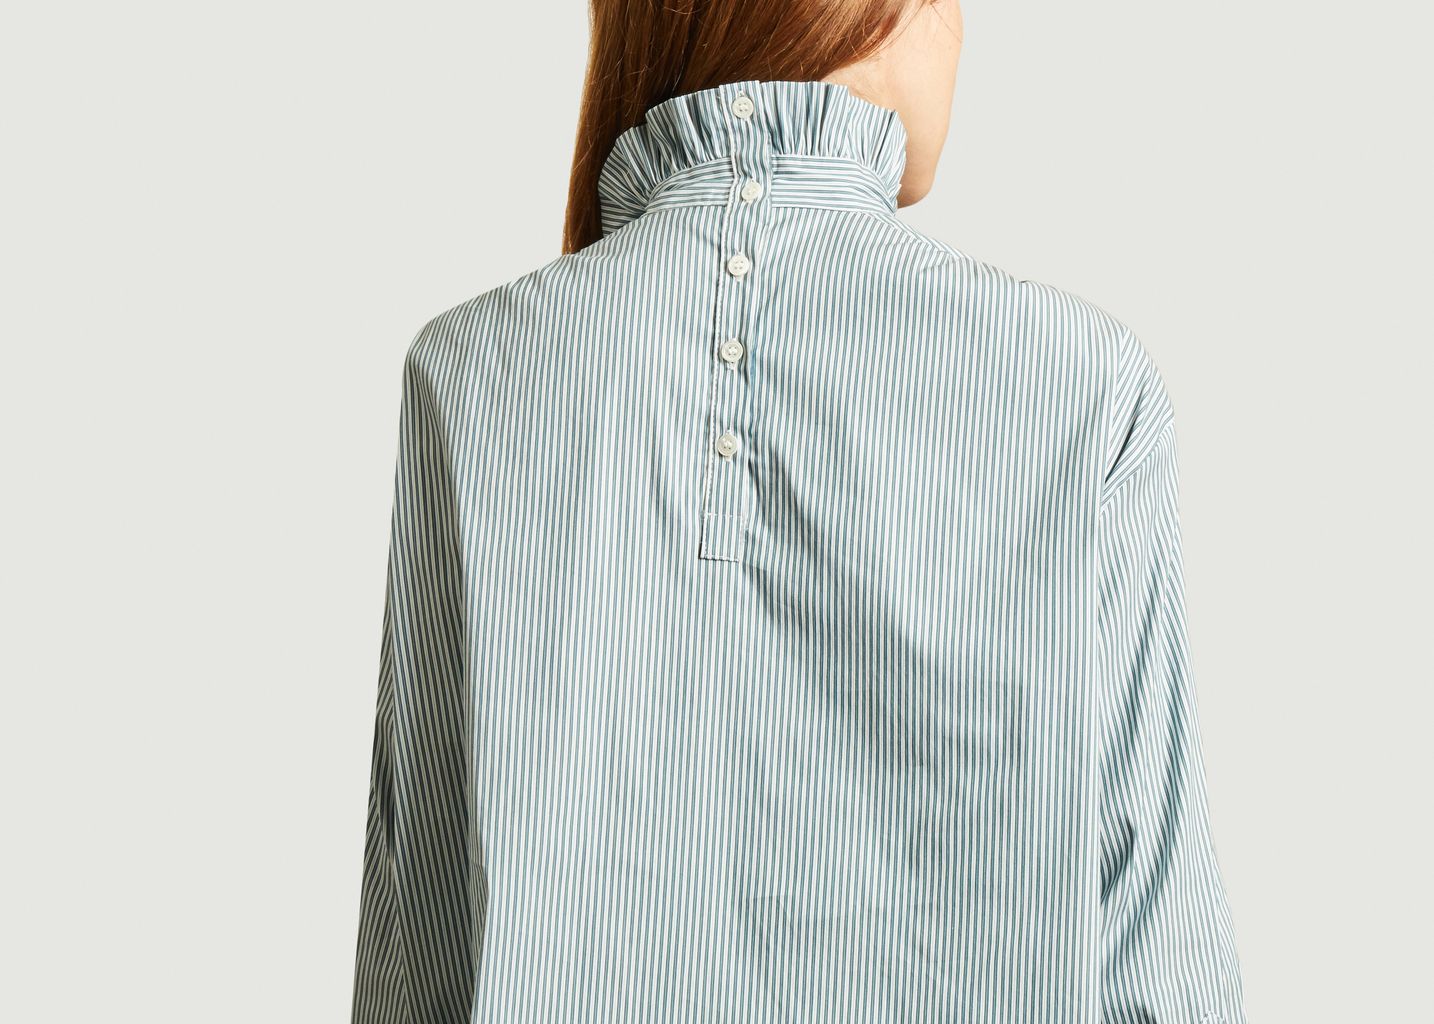 Adelaide blouse - TELA